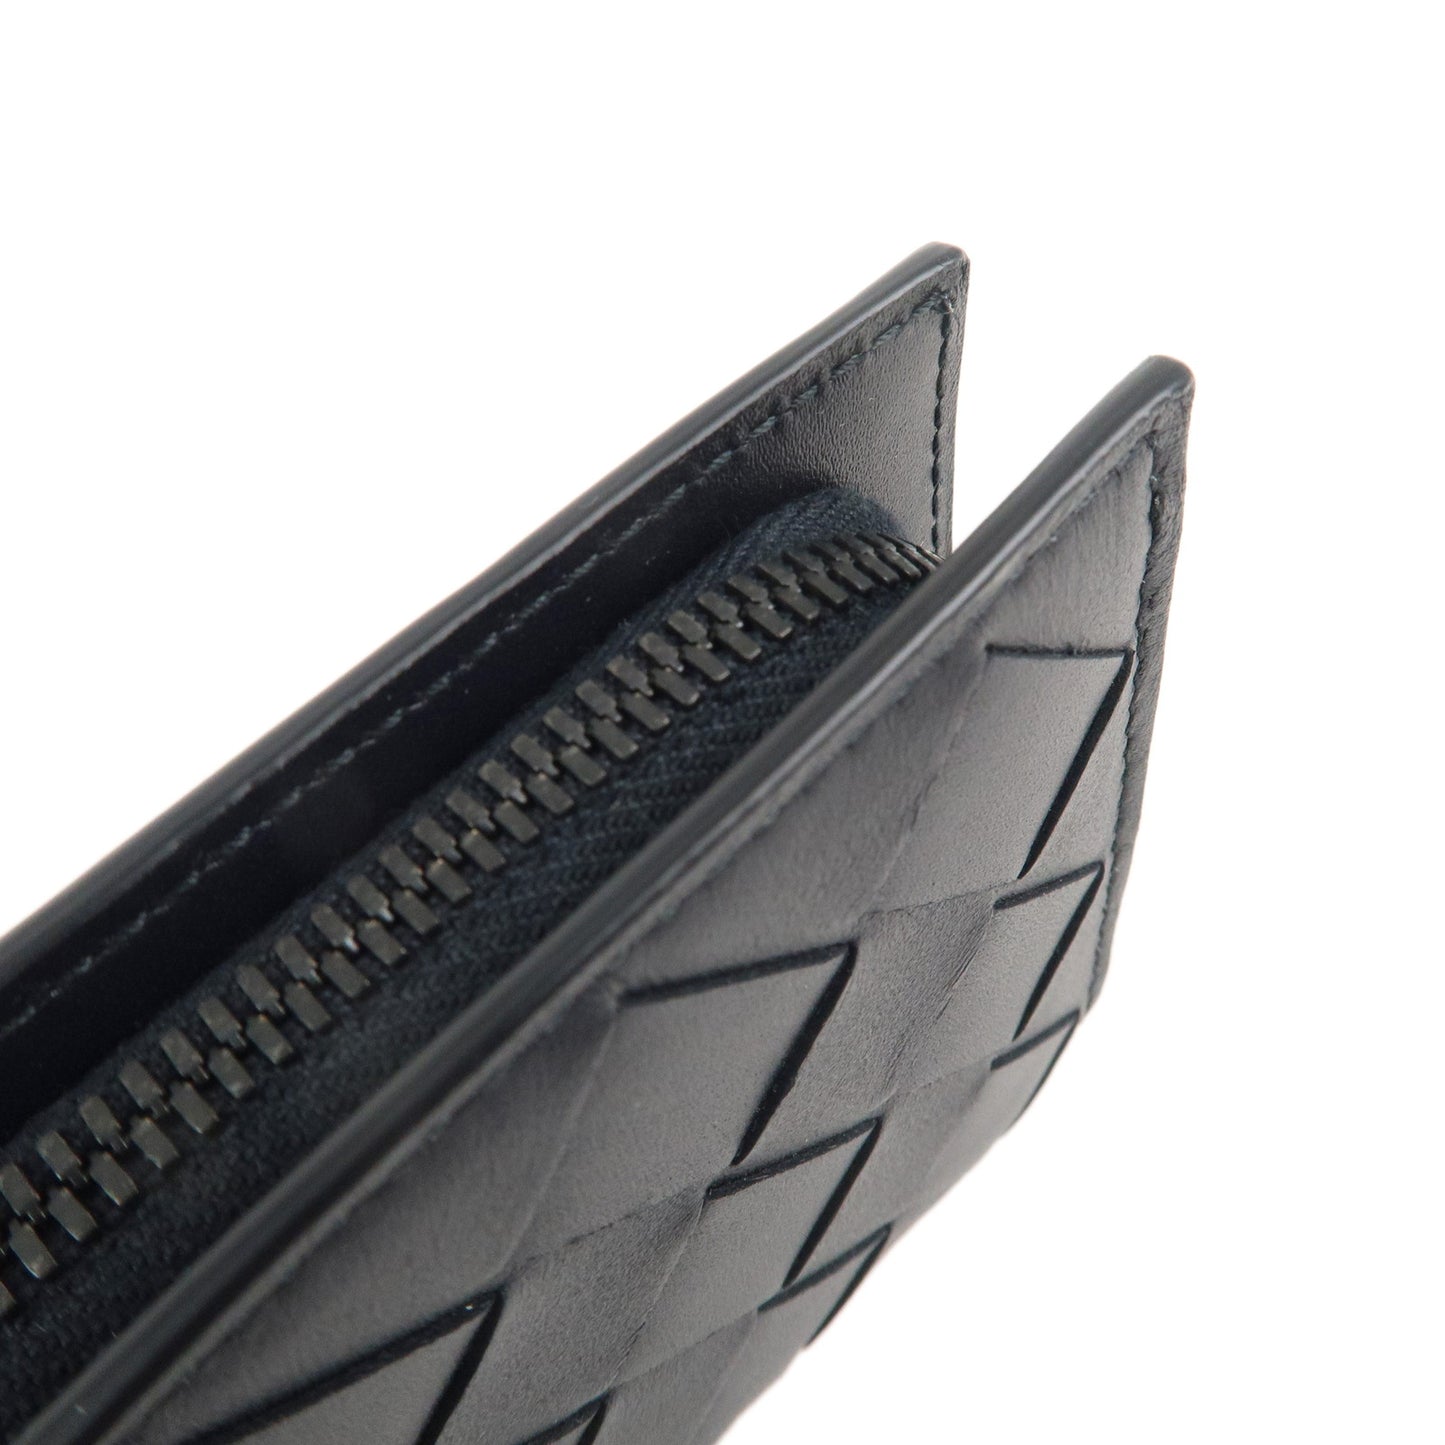 BOTTEGA VENETA Intrecciato Leather Card Case Coin Case Black